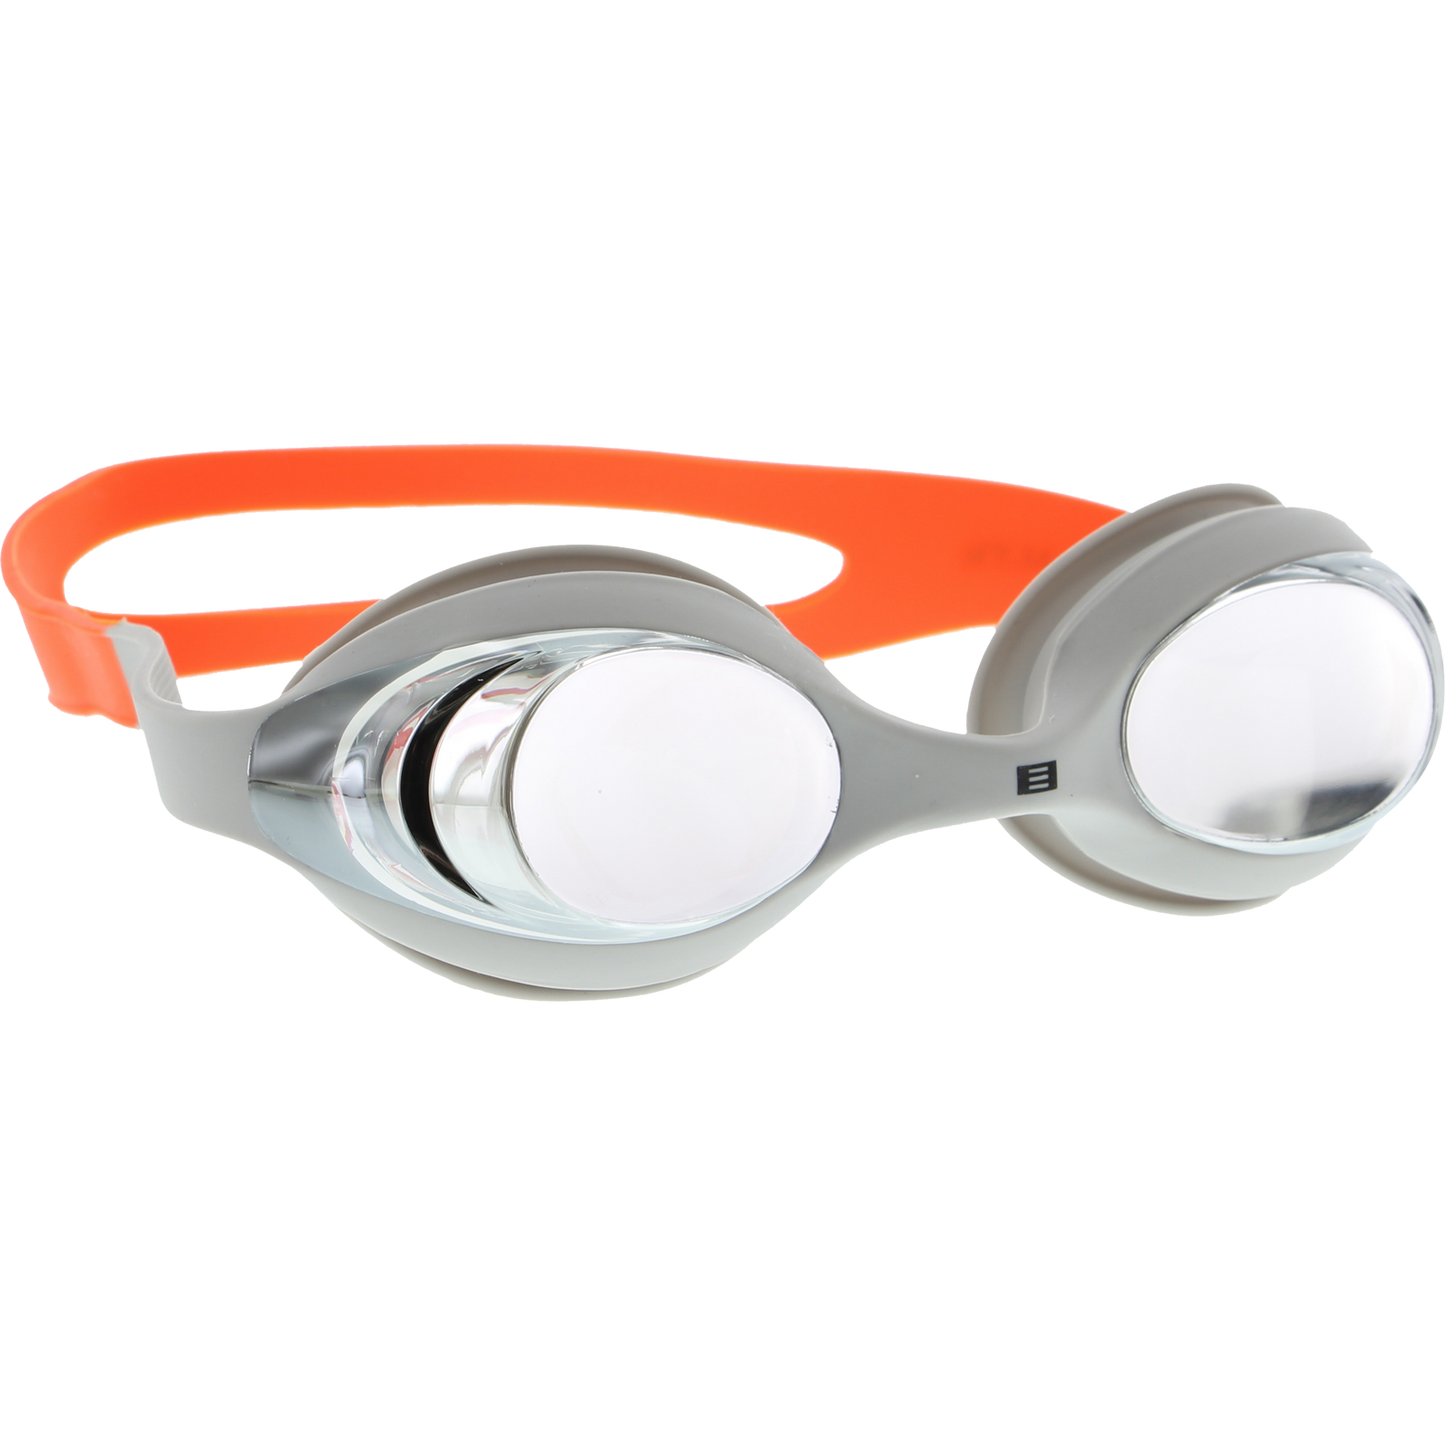 DMC Stealth Swim Goggles - Orange/Grey